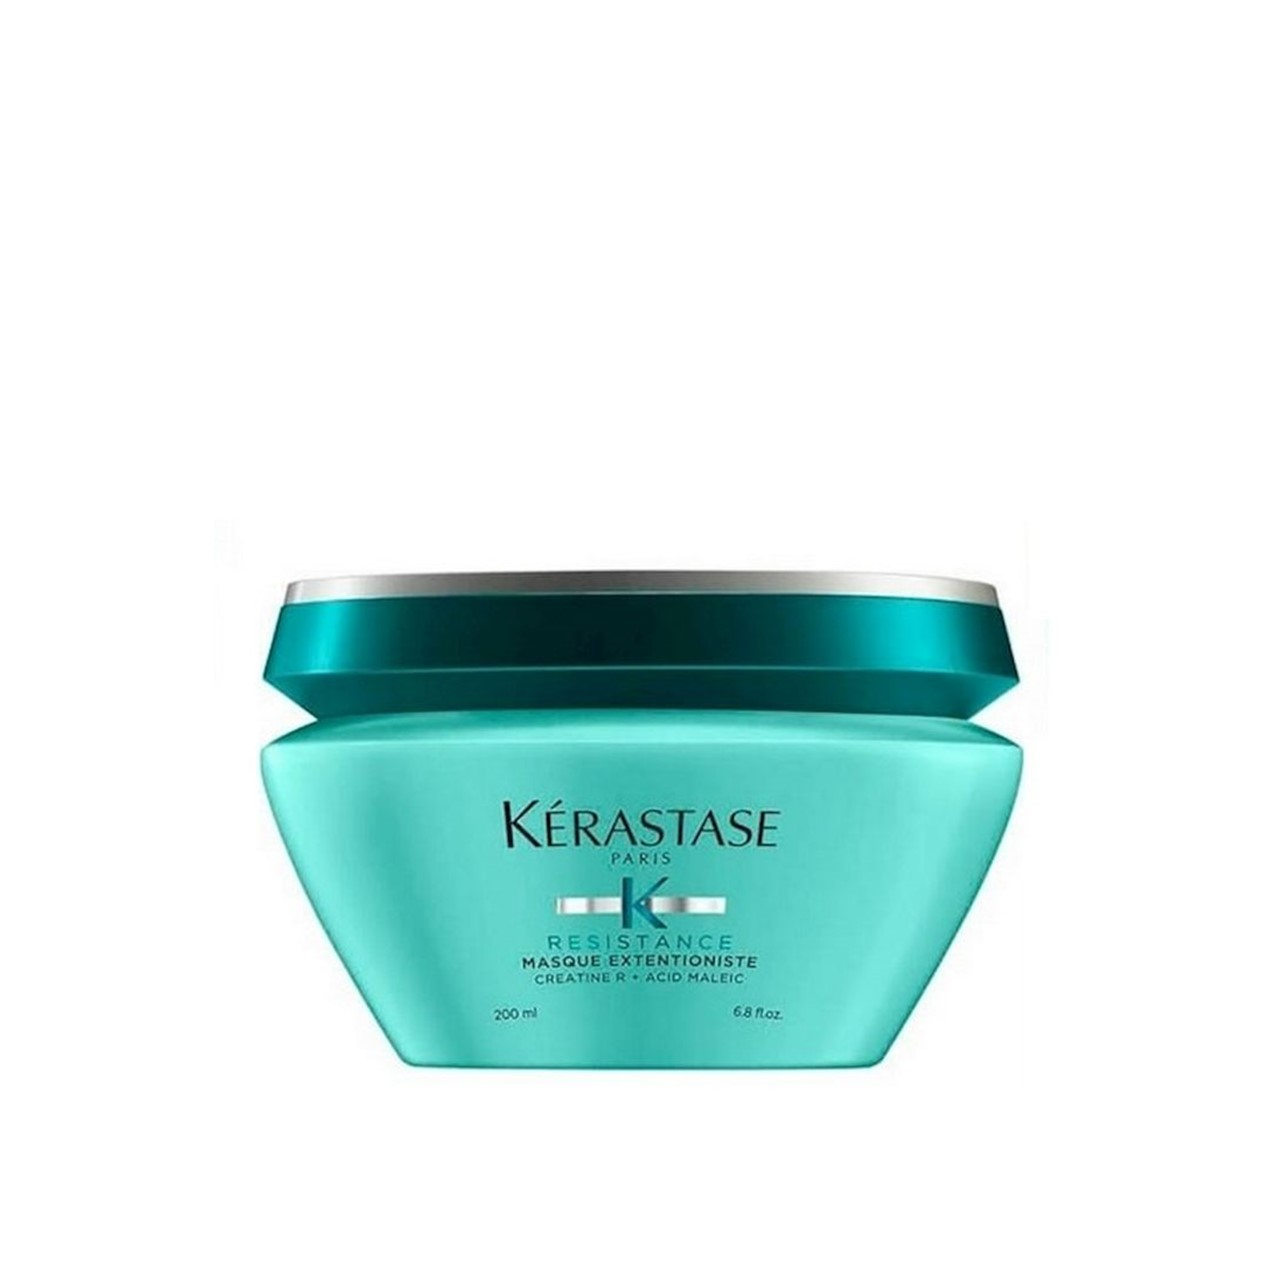 Kérastase Resistance Masque Extentioniste Hair Mask 200ml (6.76fl oz)